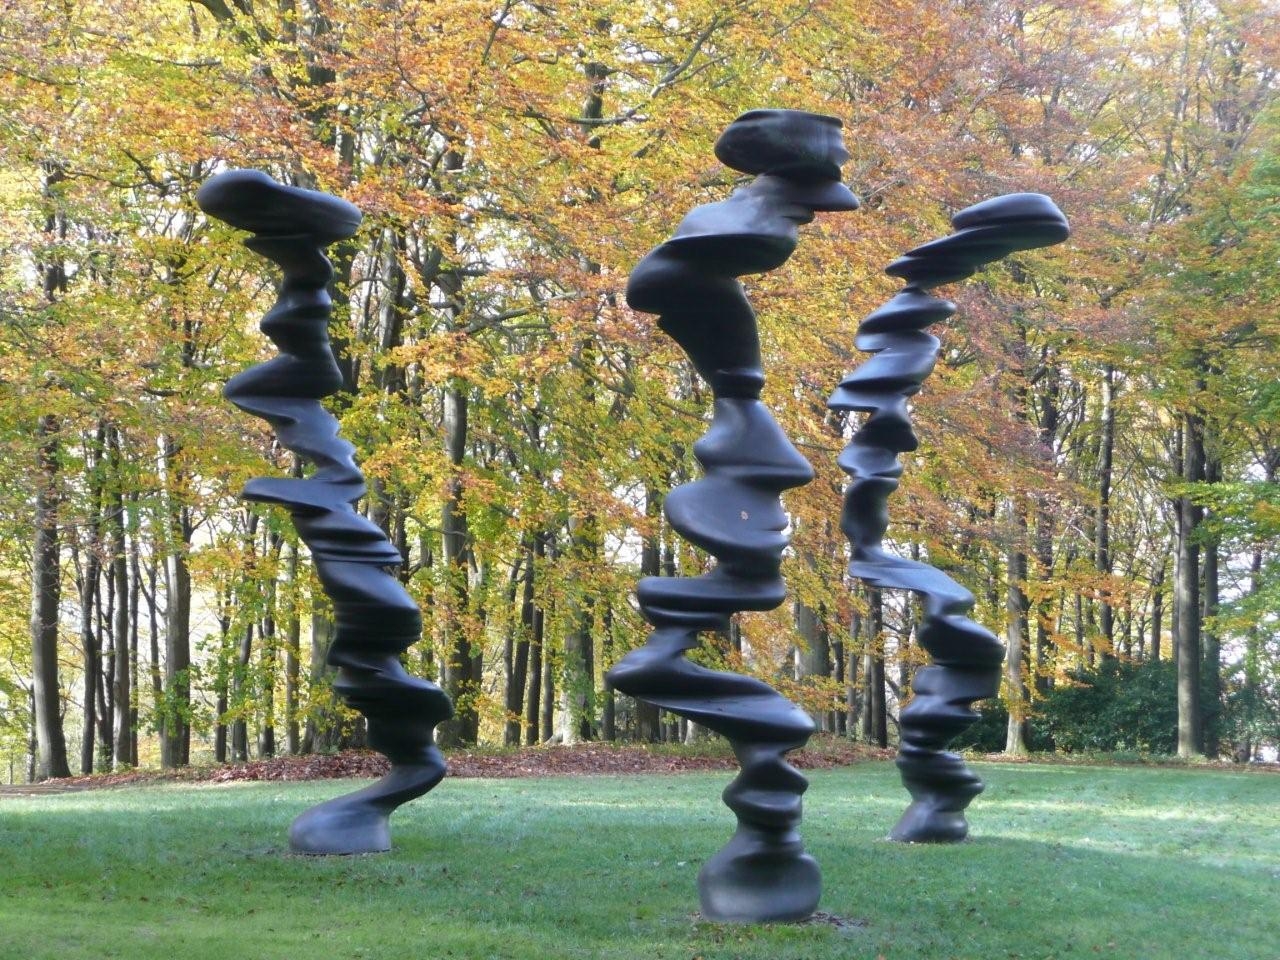 Tony Cragg, Points of View, 2007, Skulpturenpark-Waldfrieden, Germany  © Academic